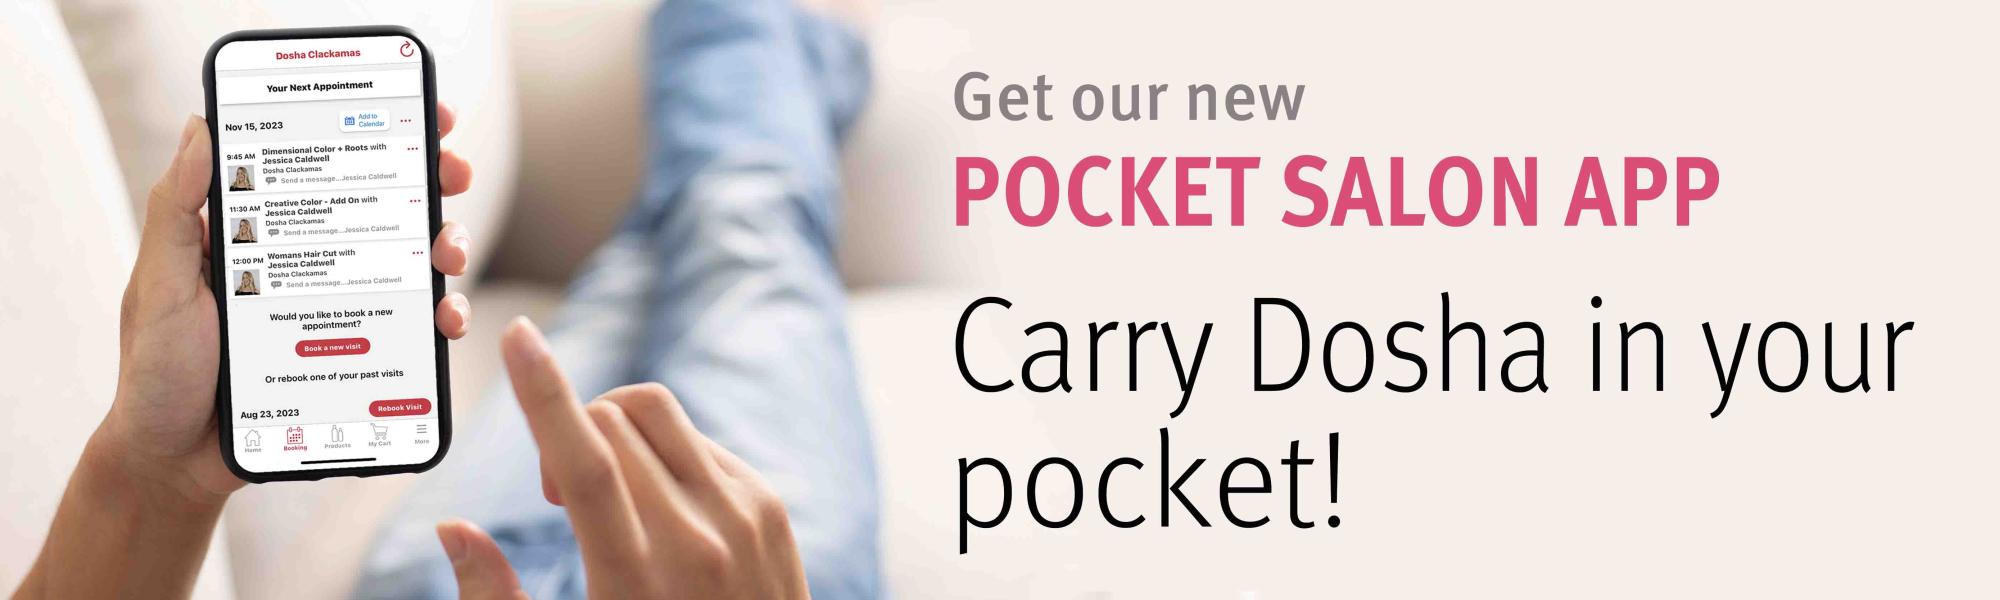 We have an app - Dosha on Pocket Salon!